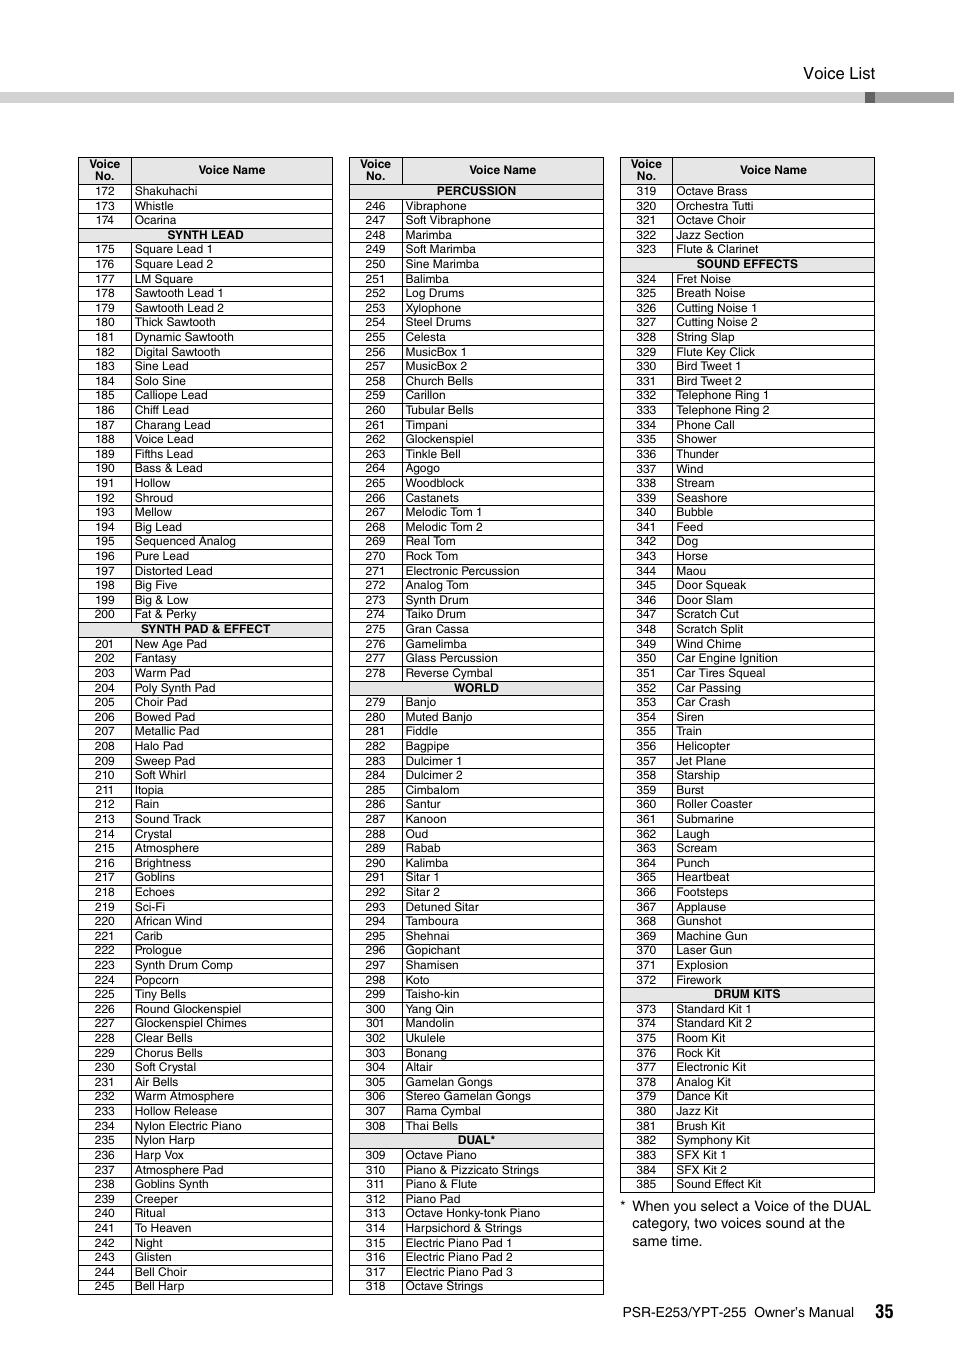 Voice list | Yamaha PSR-E253 User Manual | Page 35 / 48